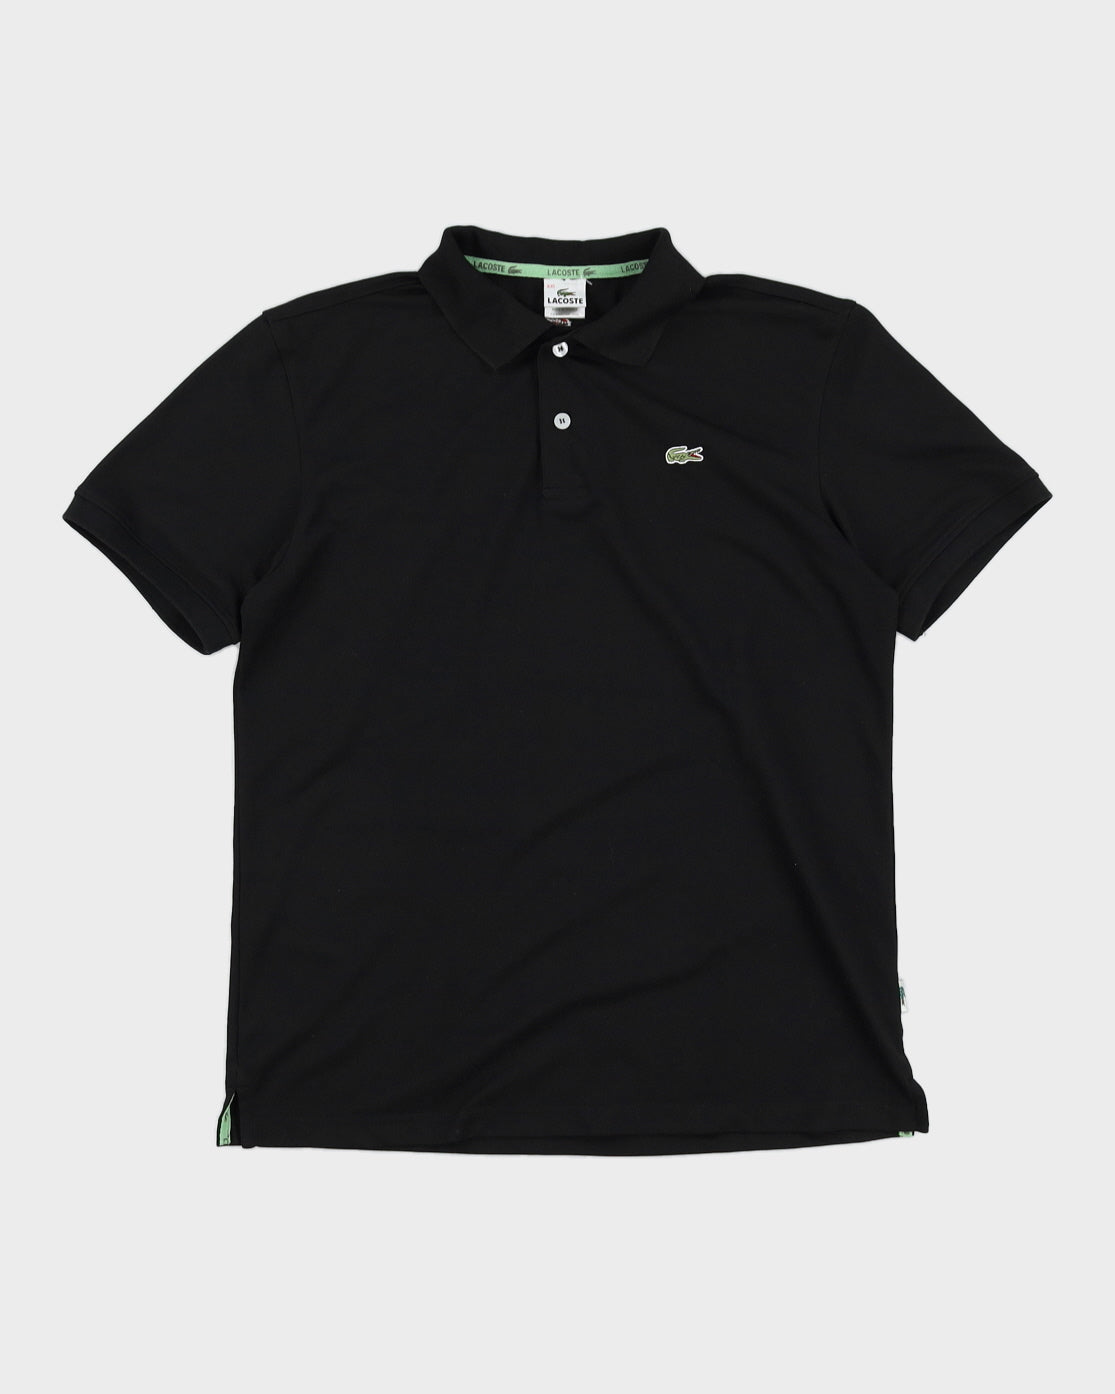 Lacoste Black Logo Polo Shirt - XL